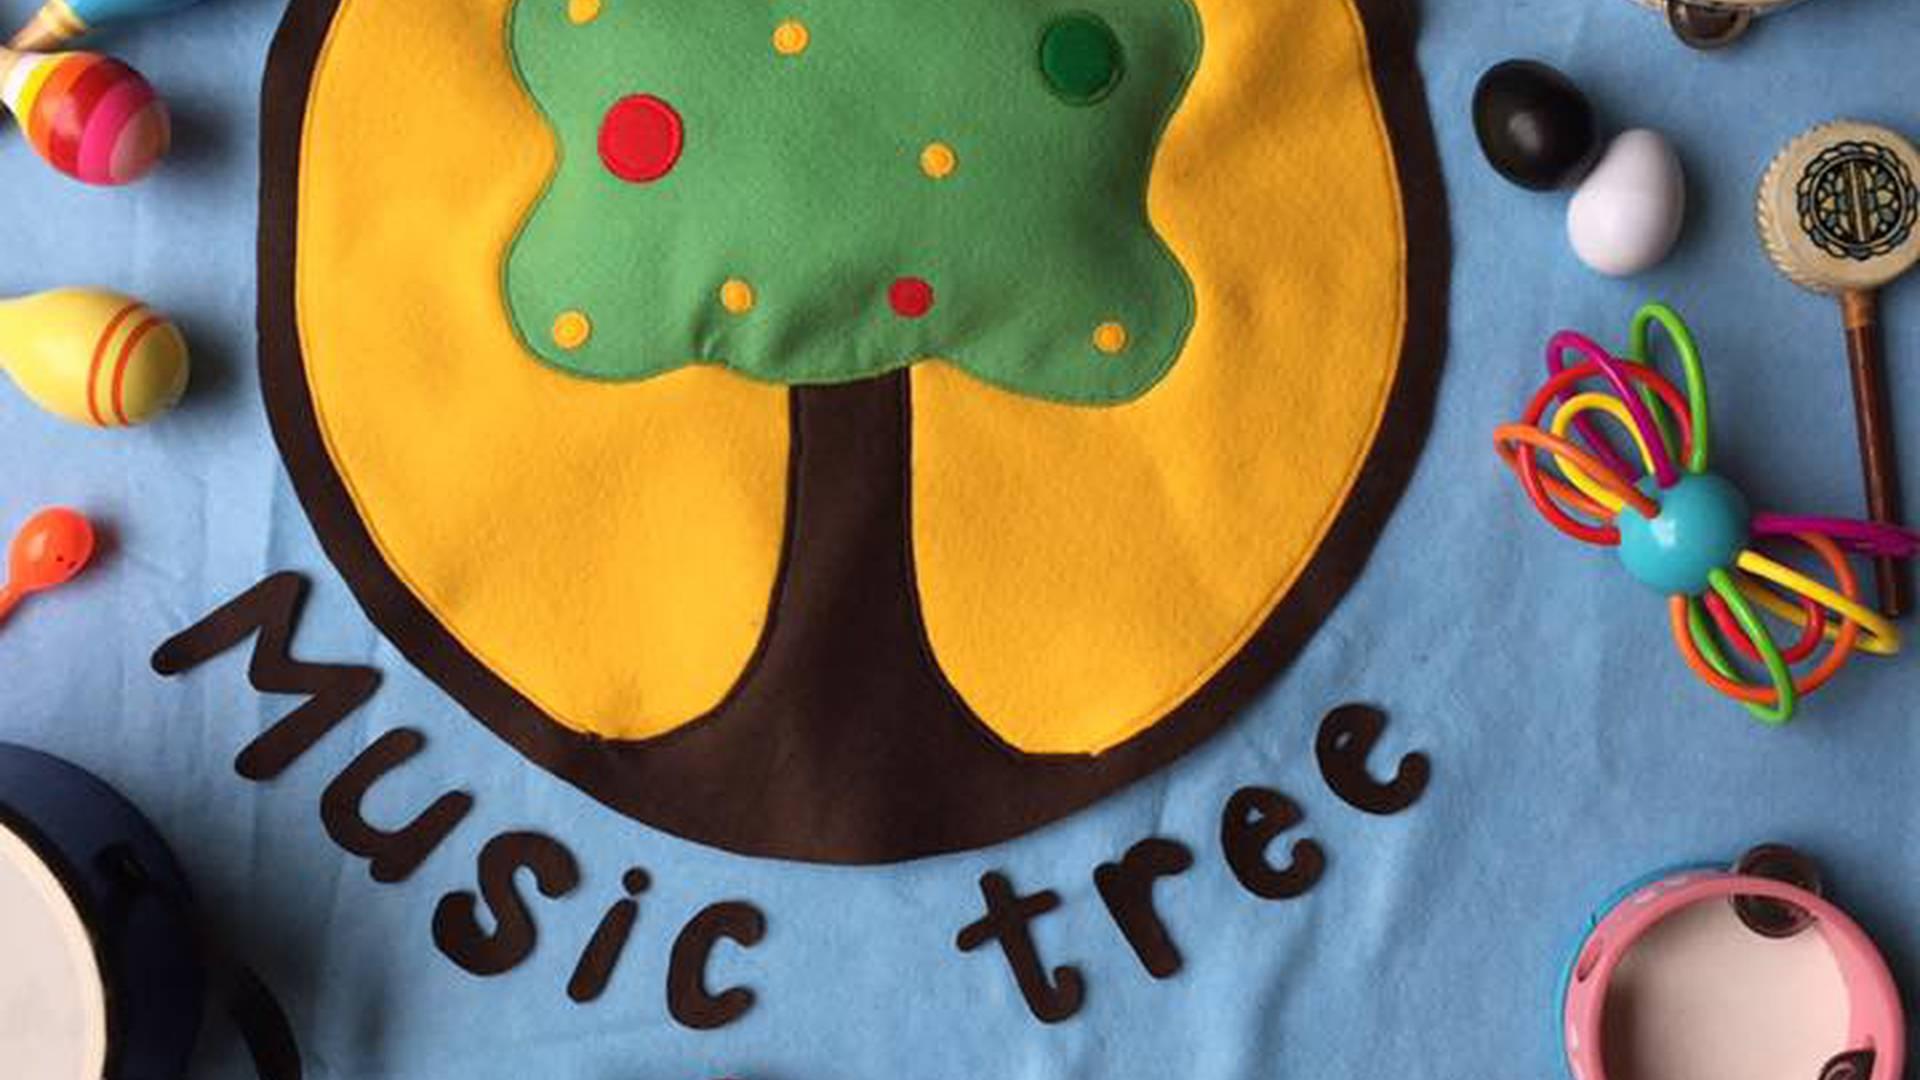 The Music Tree photo